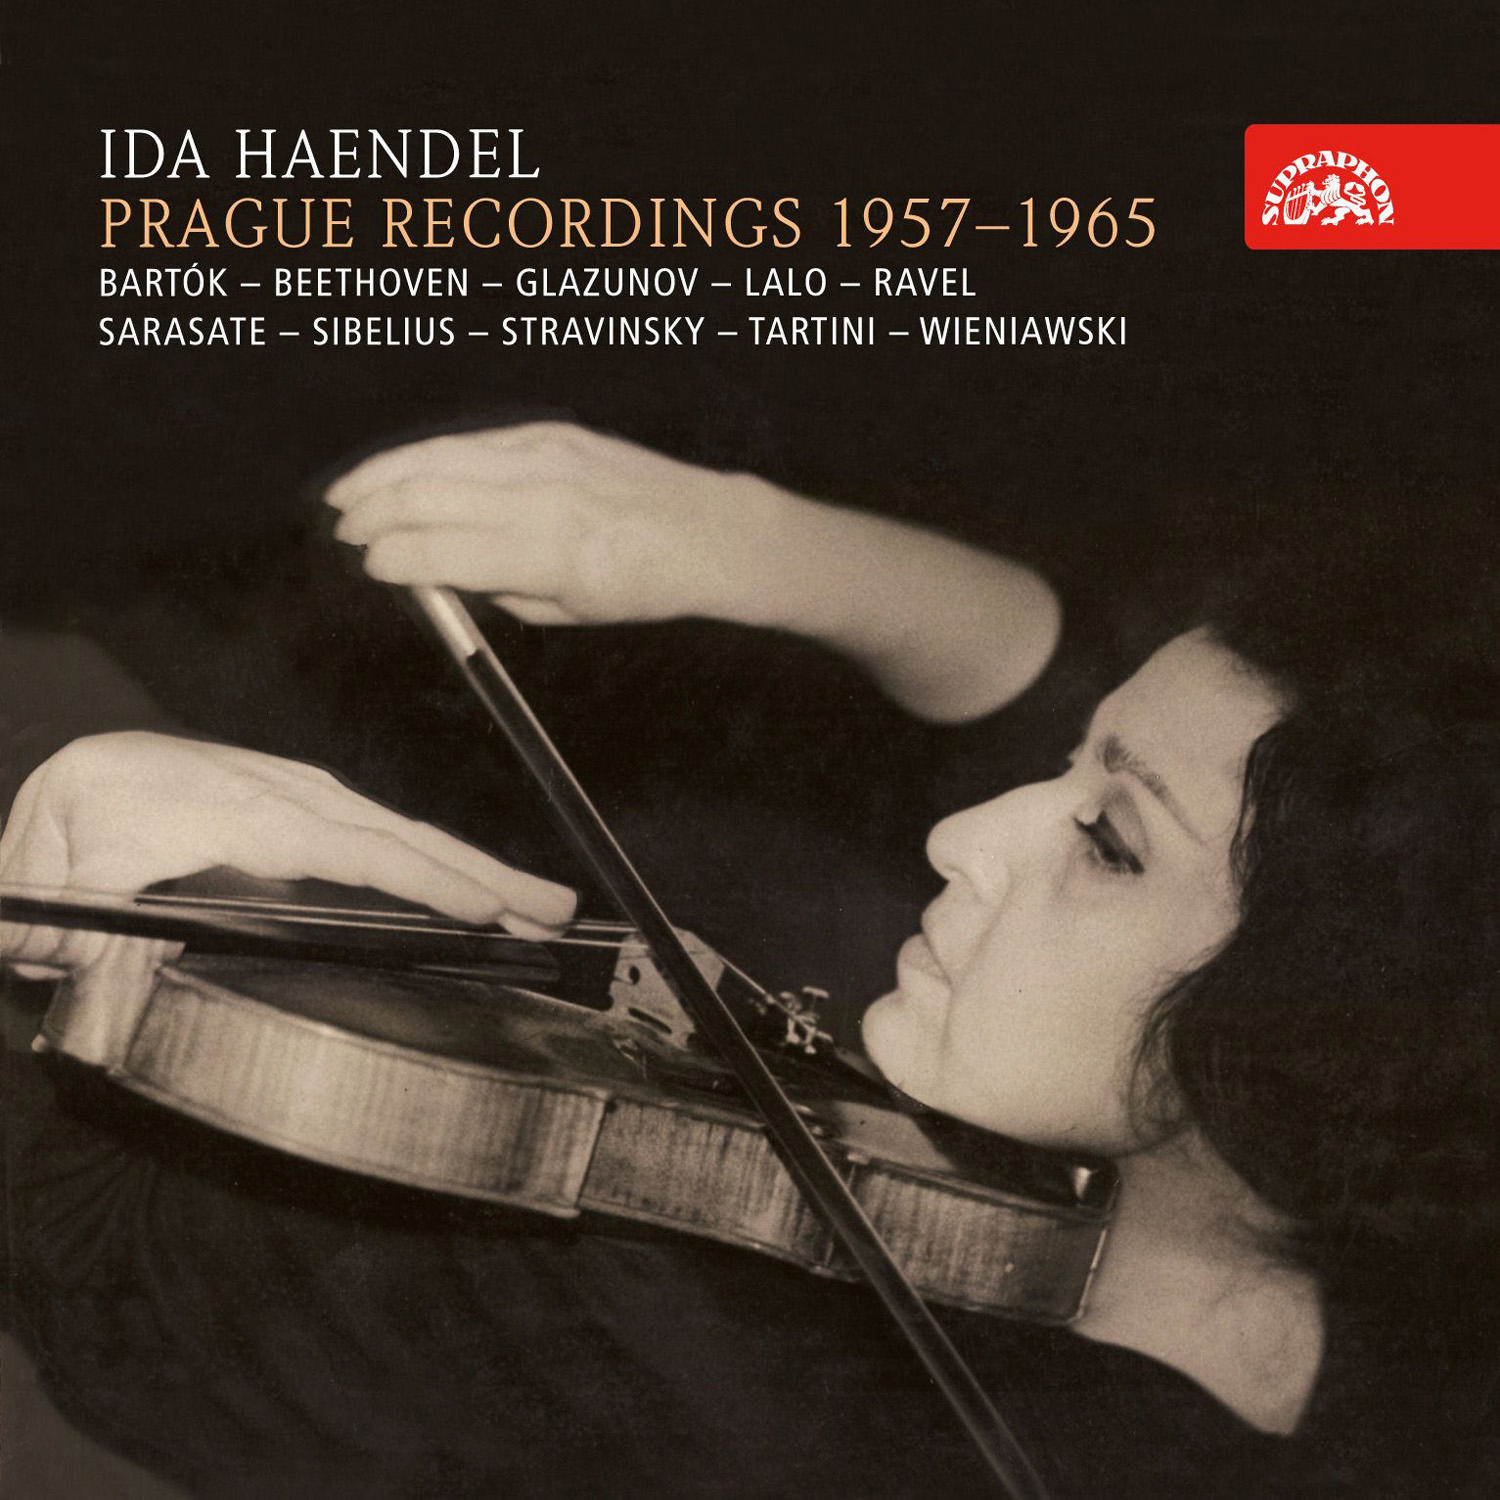 CD Shop - HANDEL, IDA PRAGUE RECORDINGS 1957-1965